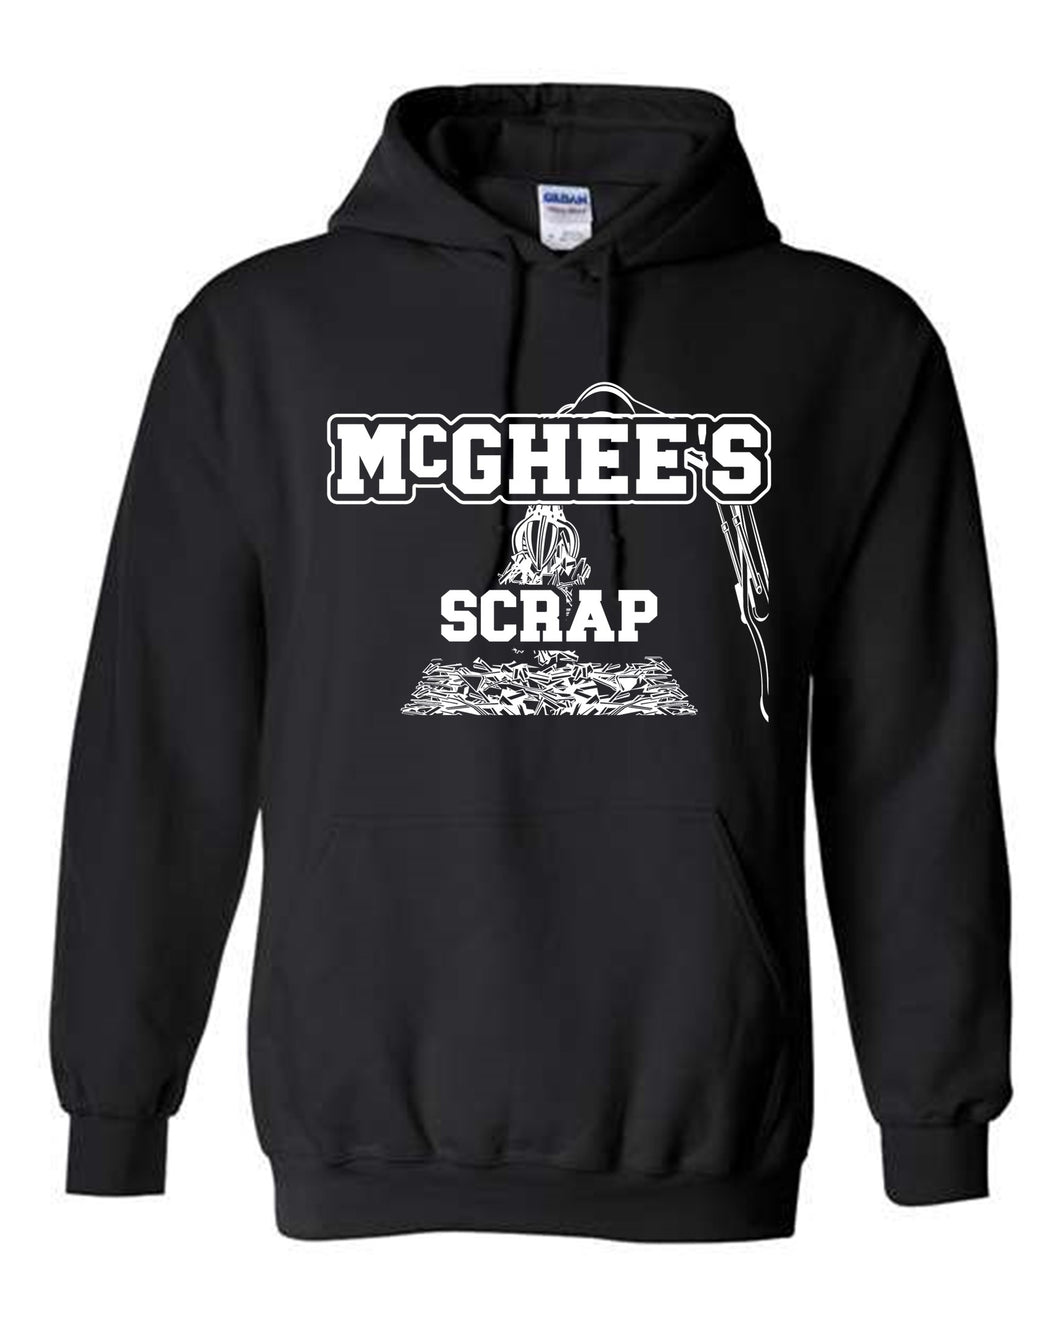 McGhee's Scrap Hoodie - Youth and Adult